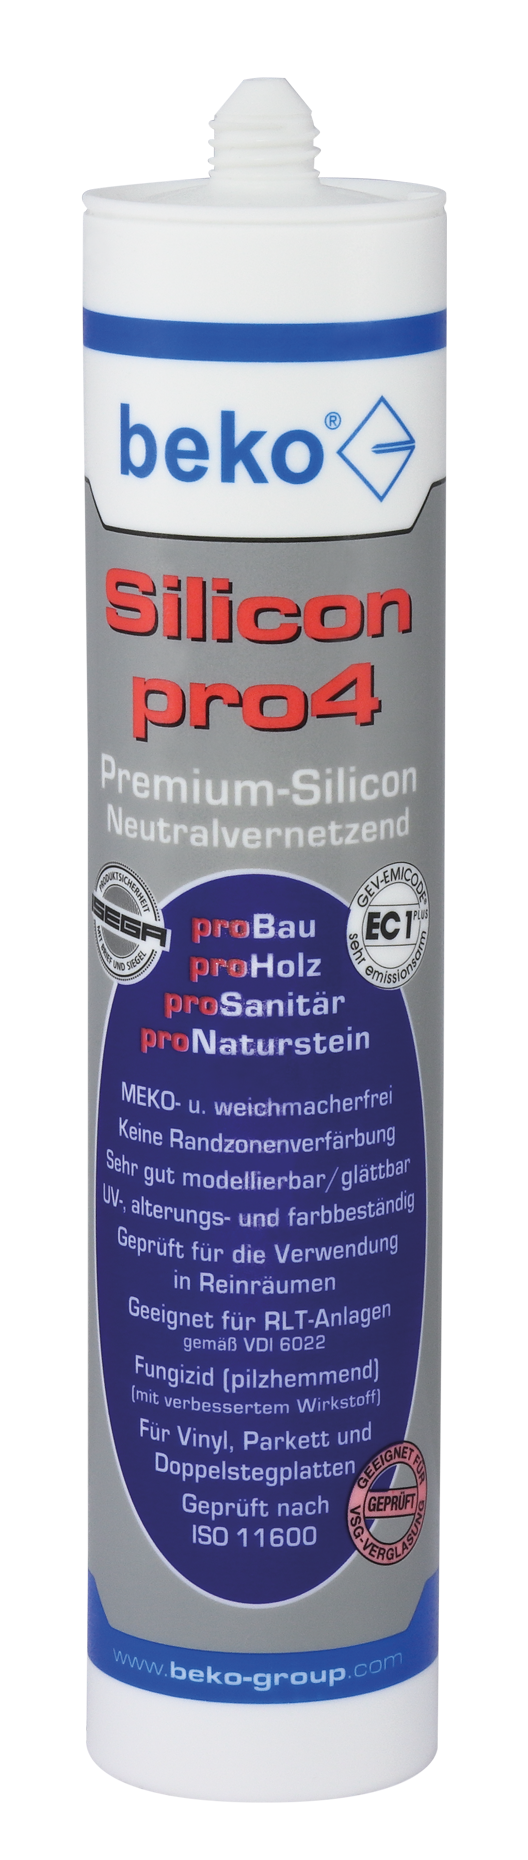 Silicon pro4 Premium 310ml anthrazit